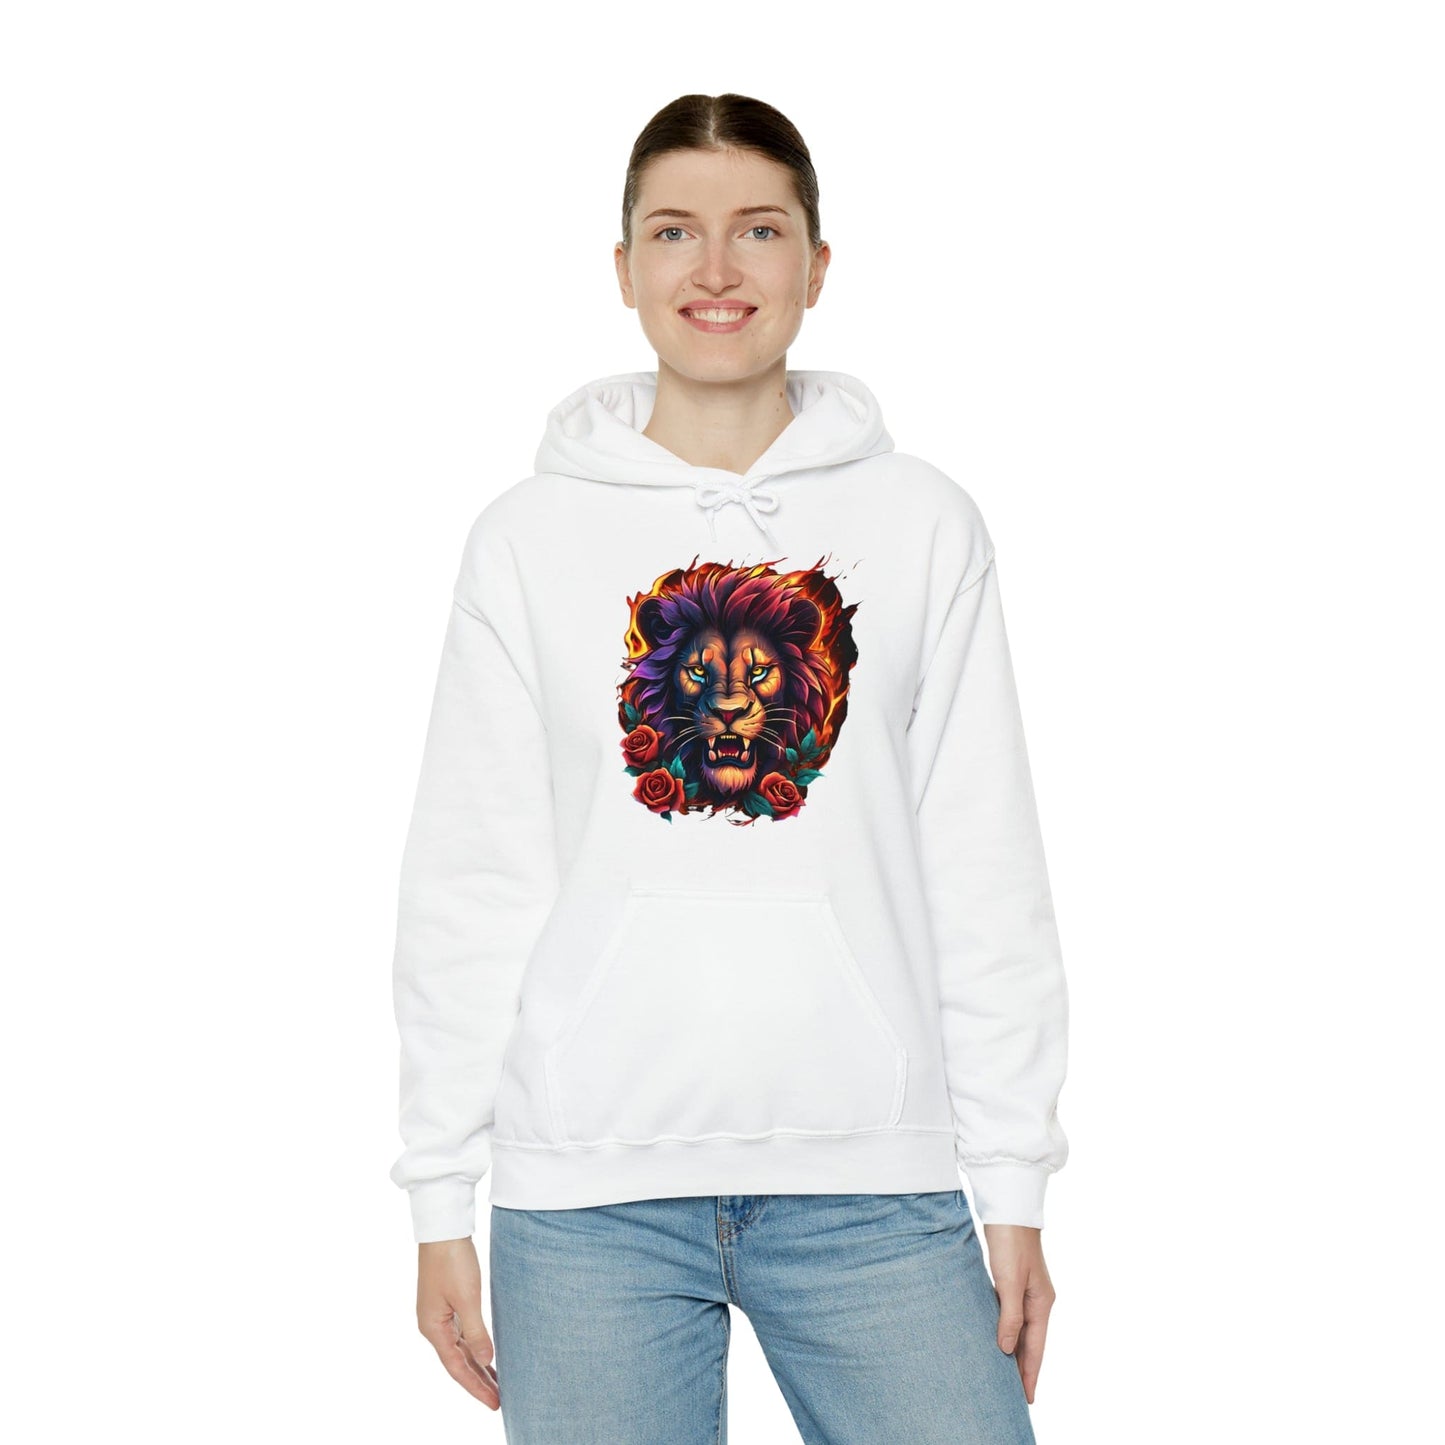 Eye of Lion Flames and Roses Hooded Sweatshirt Flashlander